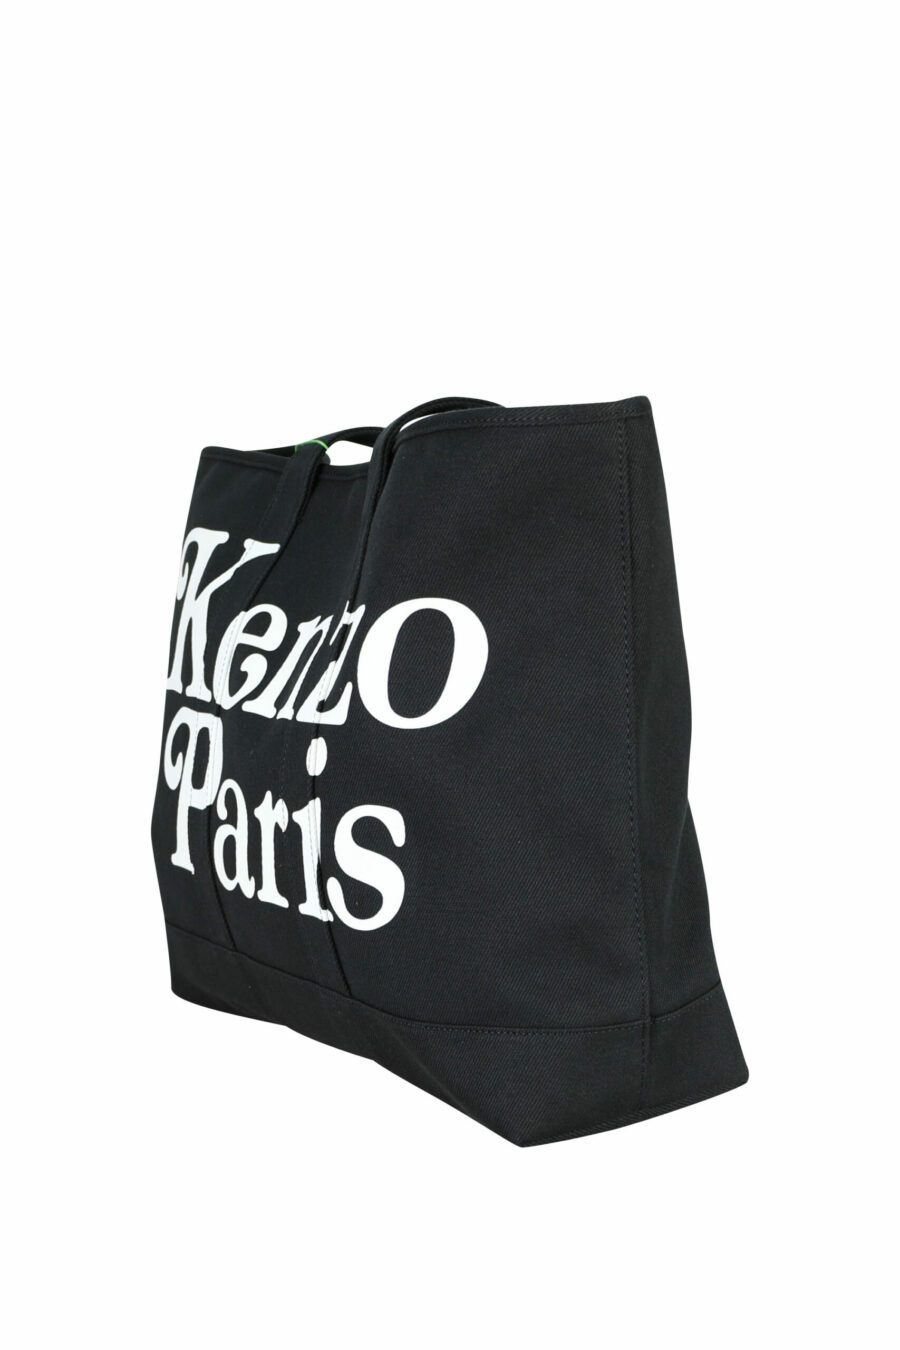 Tote bag black with maxilogo "kenzo utility" - 3612230581388 1 scaled